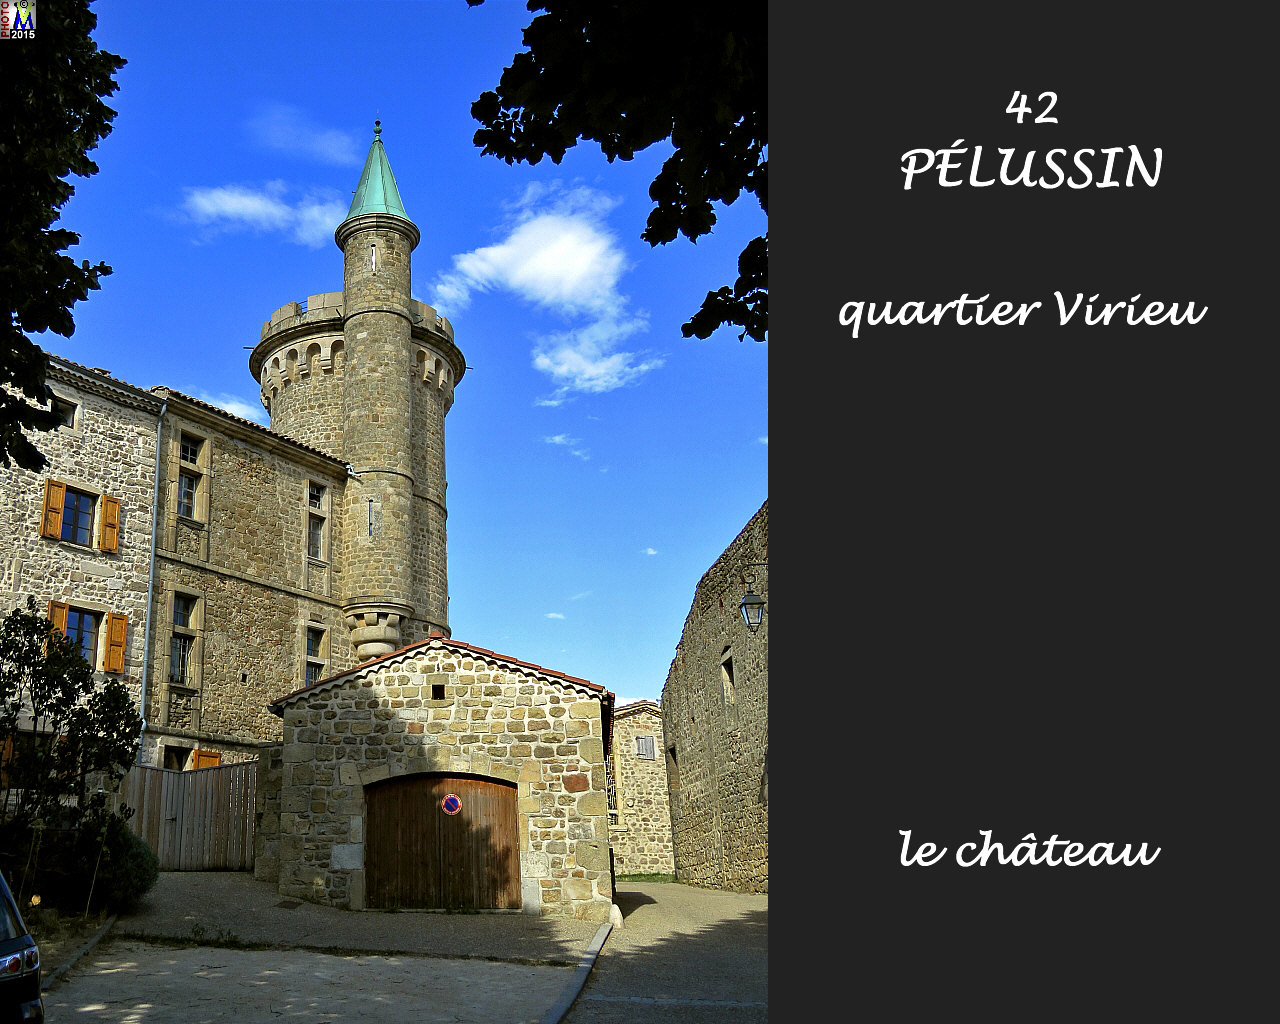 42PELUSSINzVirieu_chateau_108.jpg